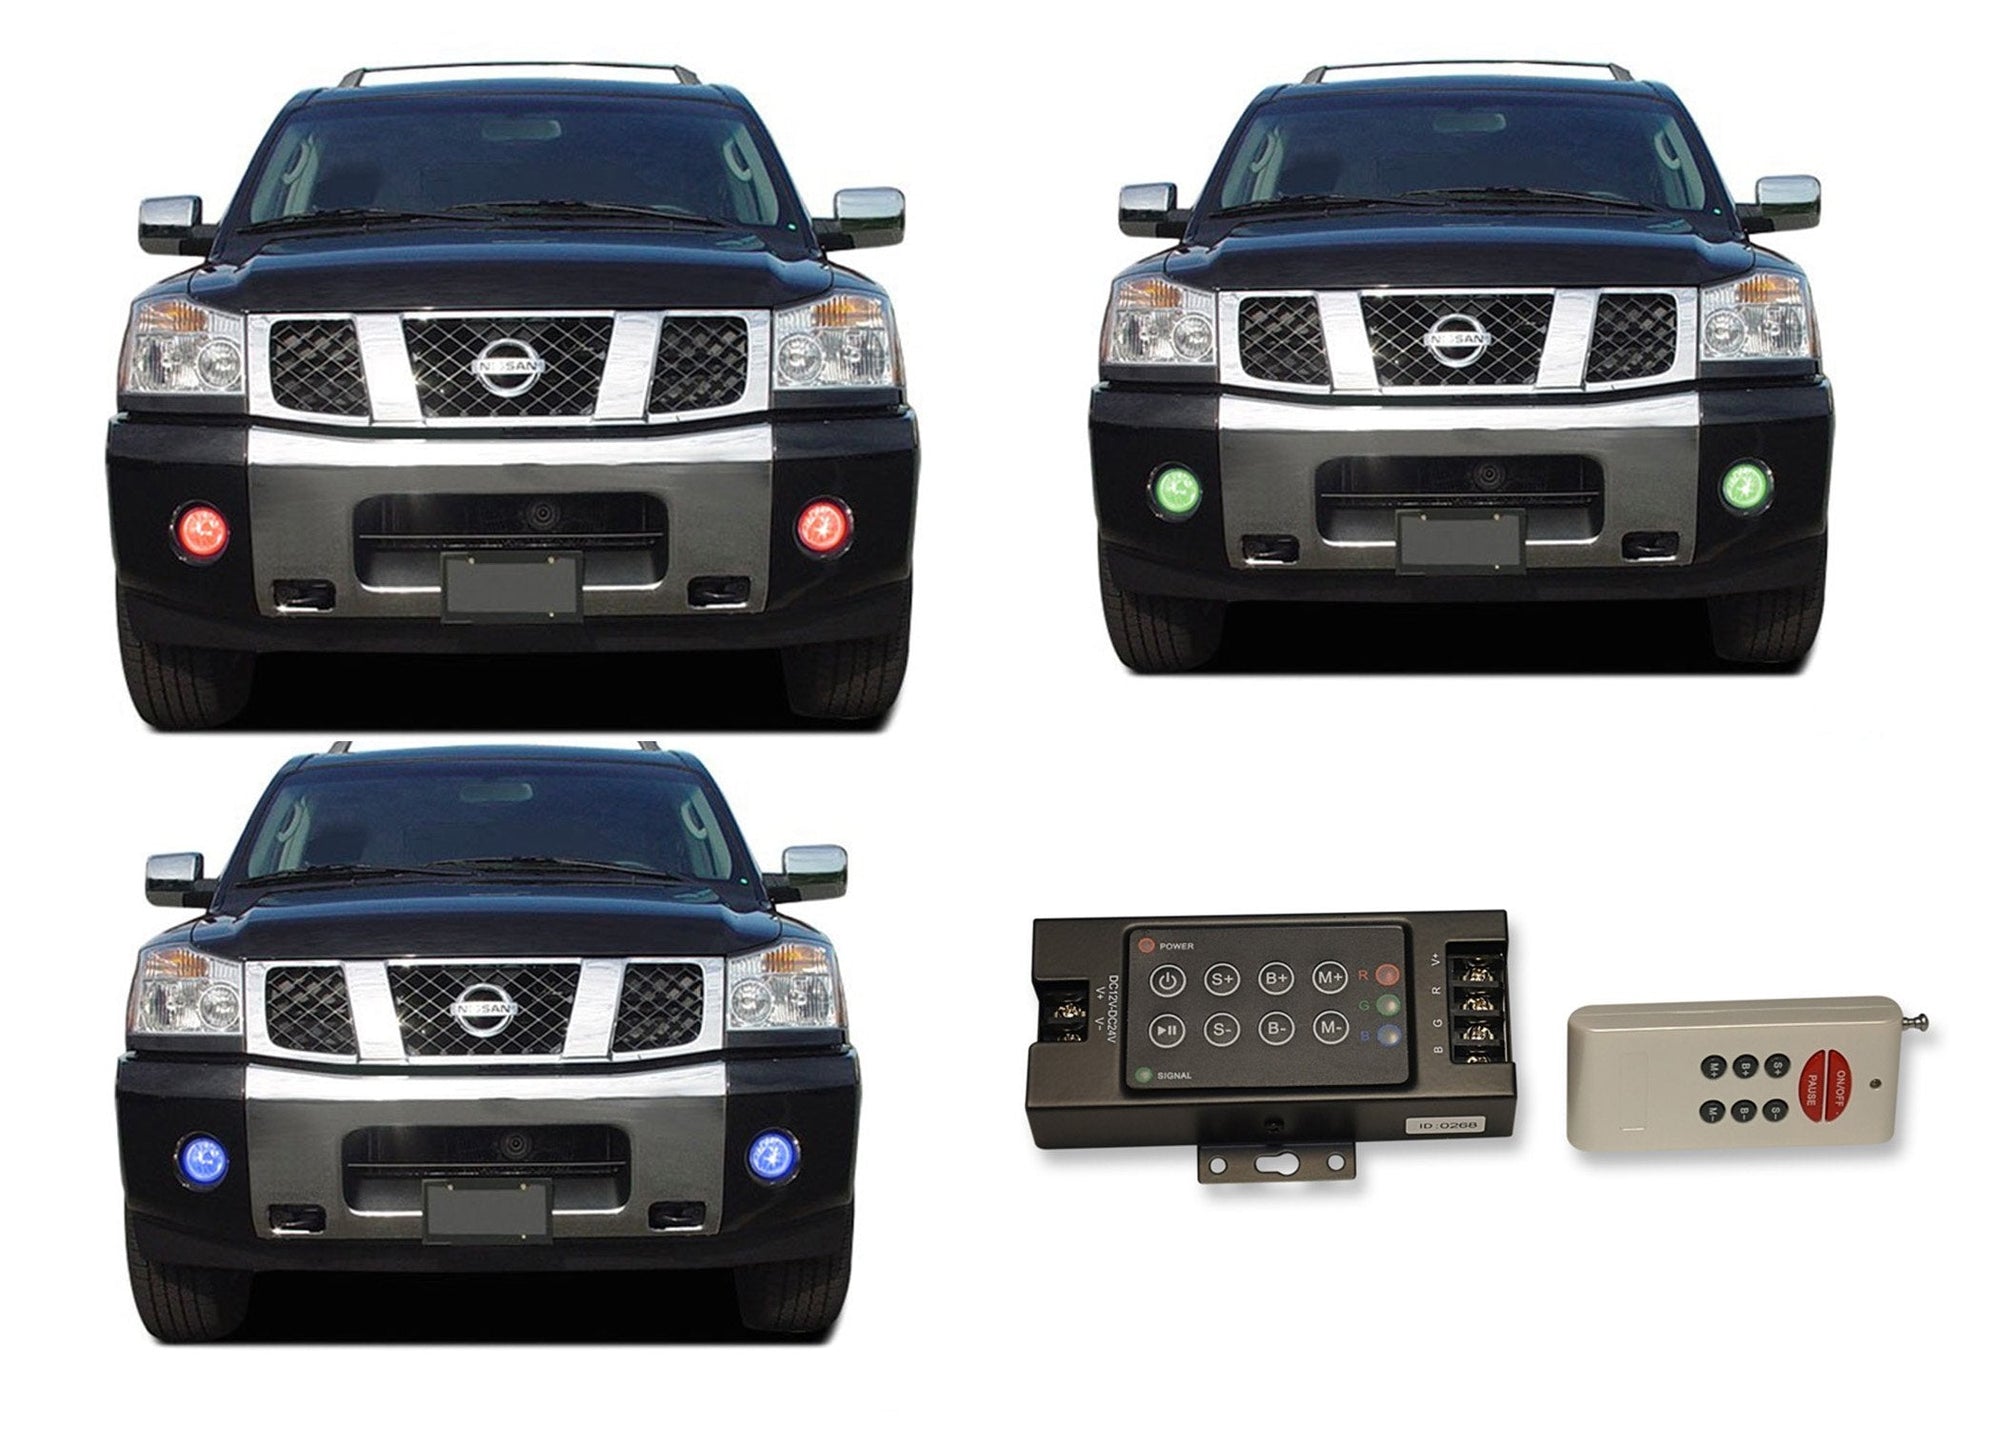 Nissan-Armada-2004, 2005, 2006, 2007-LED-Halo-Fog Lights-RGB-RF Remote-NI-AR0407-V3FRF